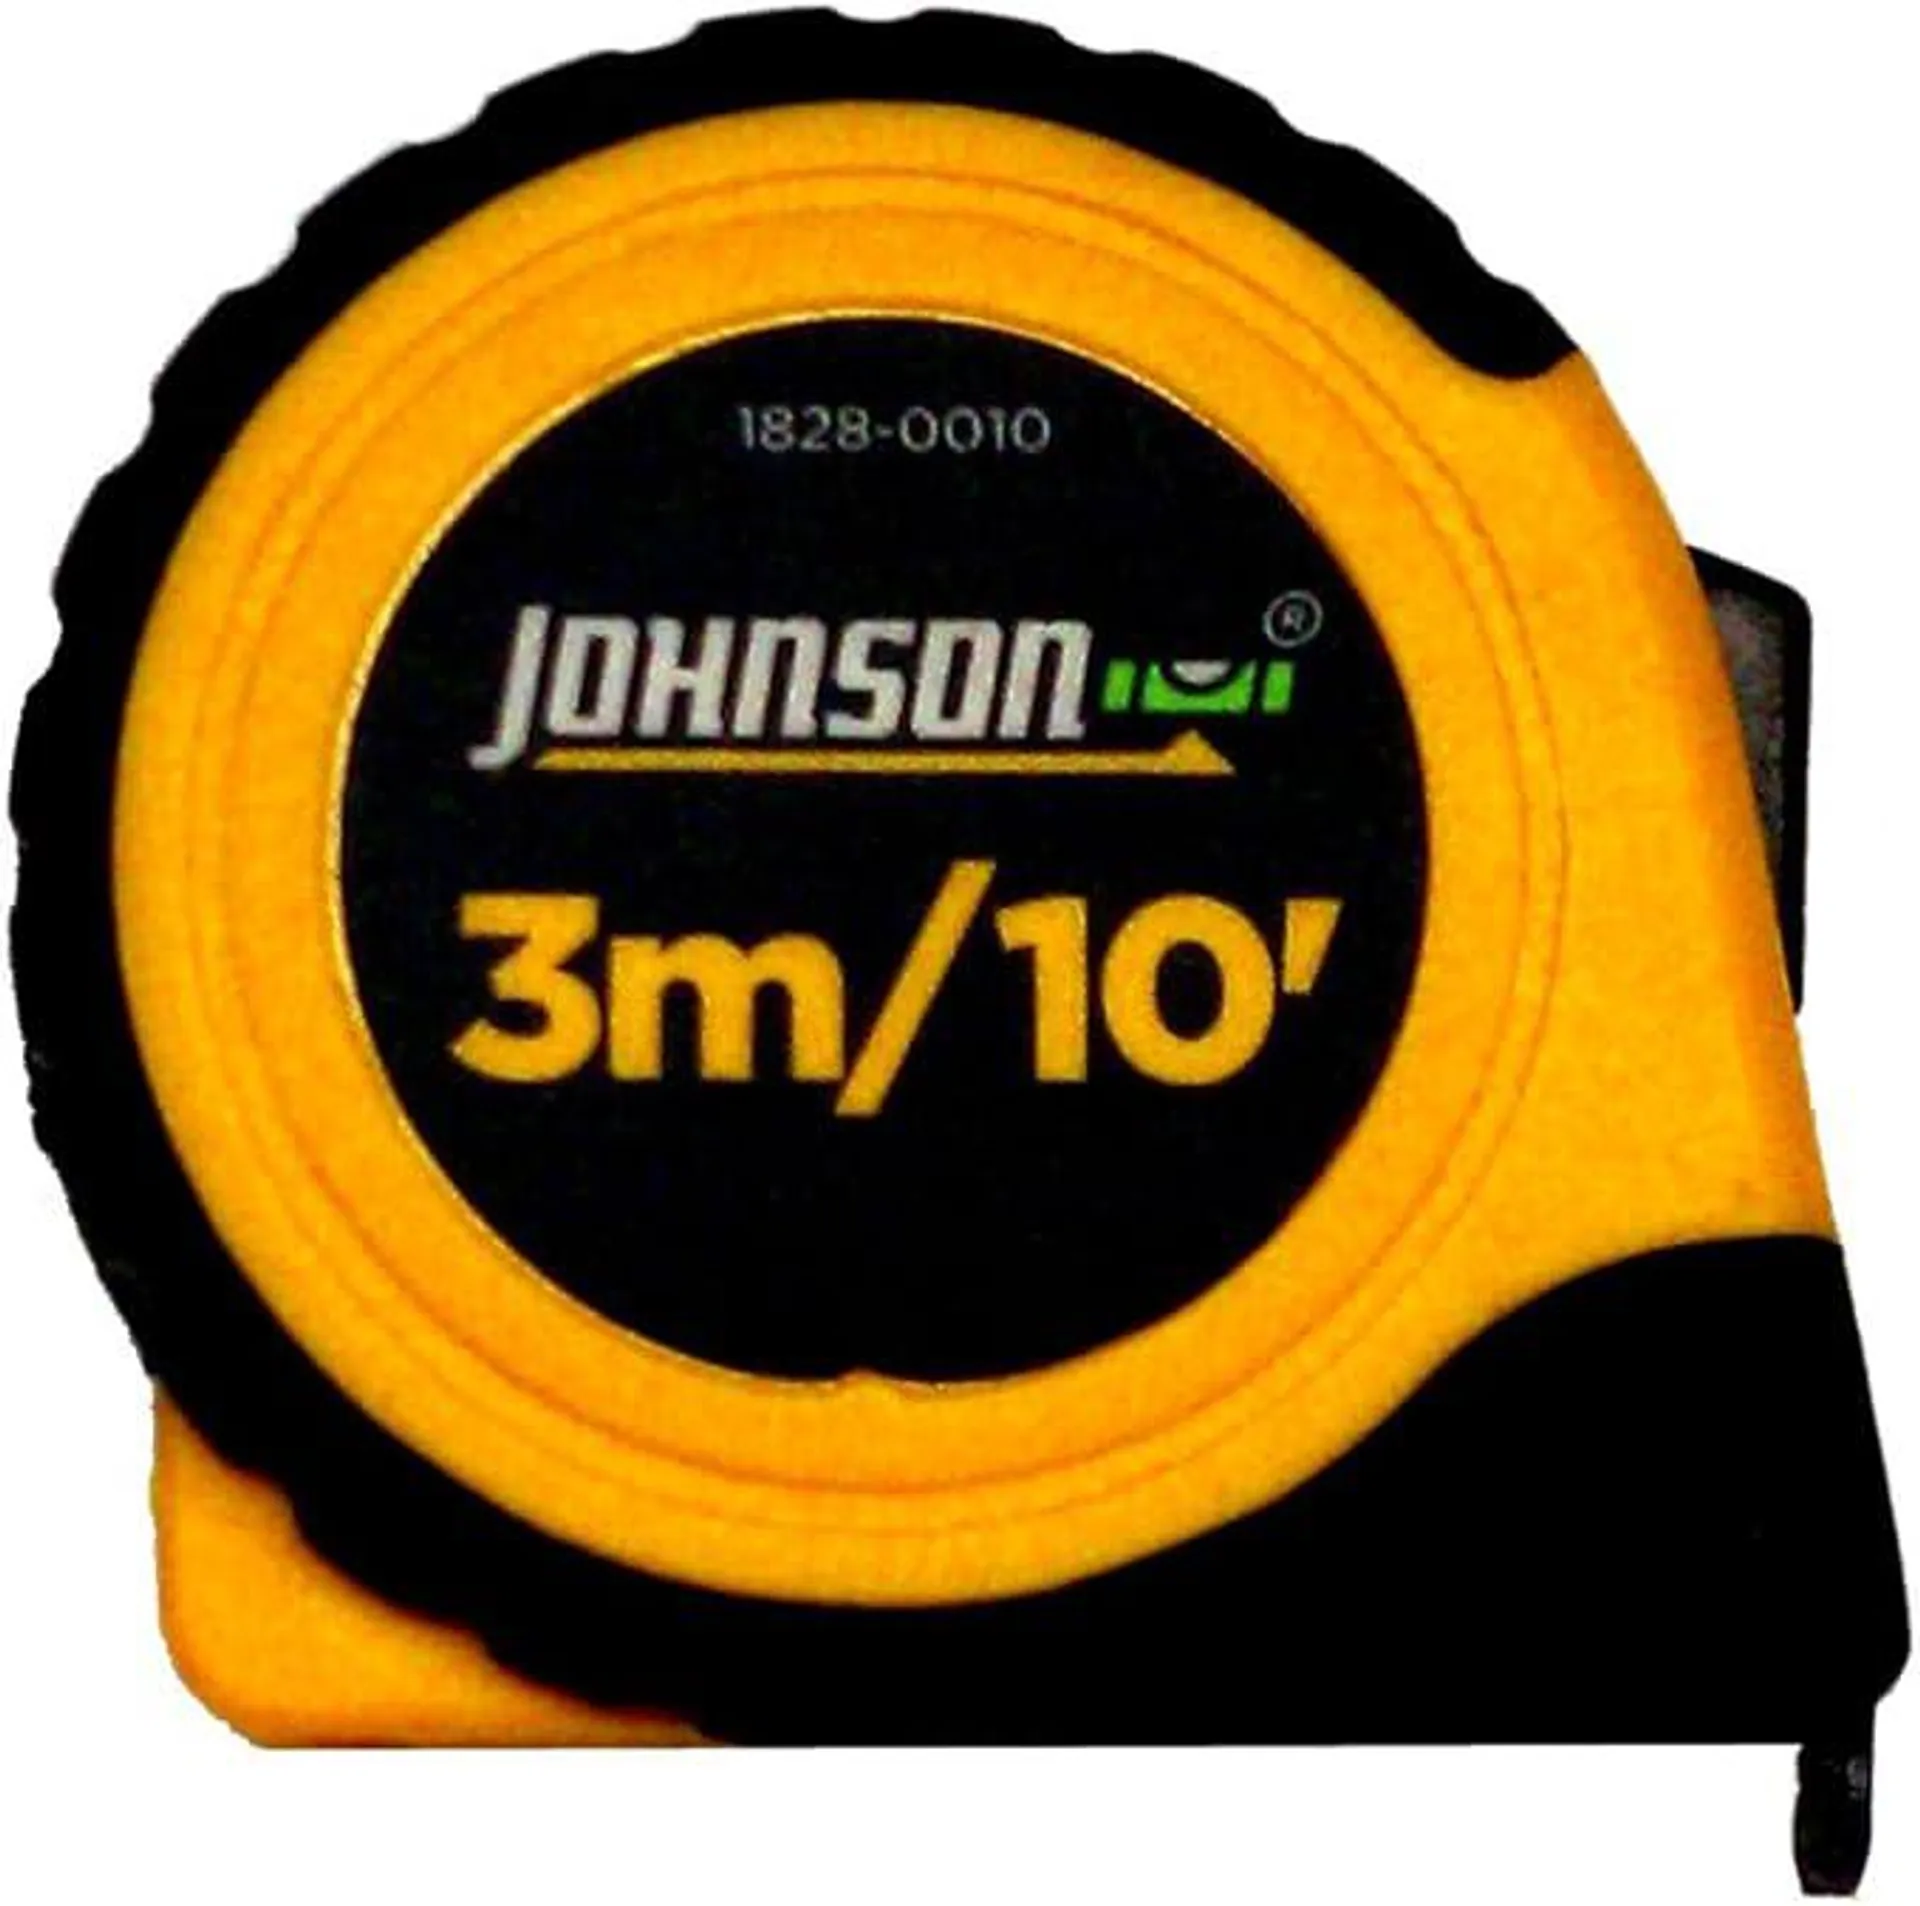 Johnson Level & Tool 1828-0010 Metric/Inch Power Tape, 3m/10', Black/Yellow, 1 Tape